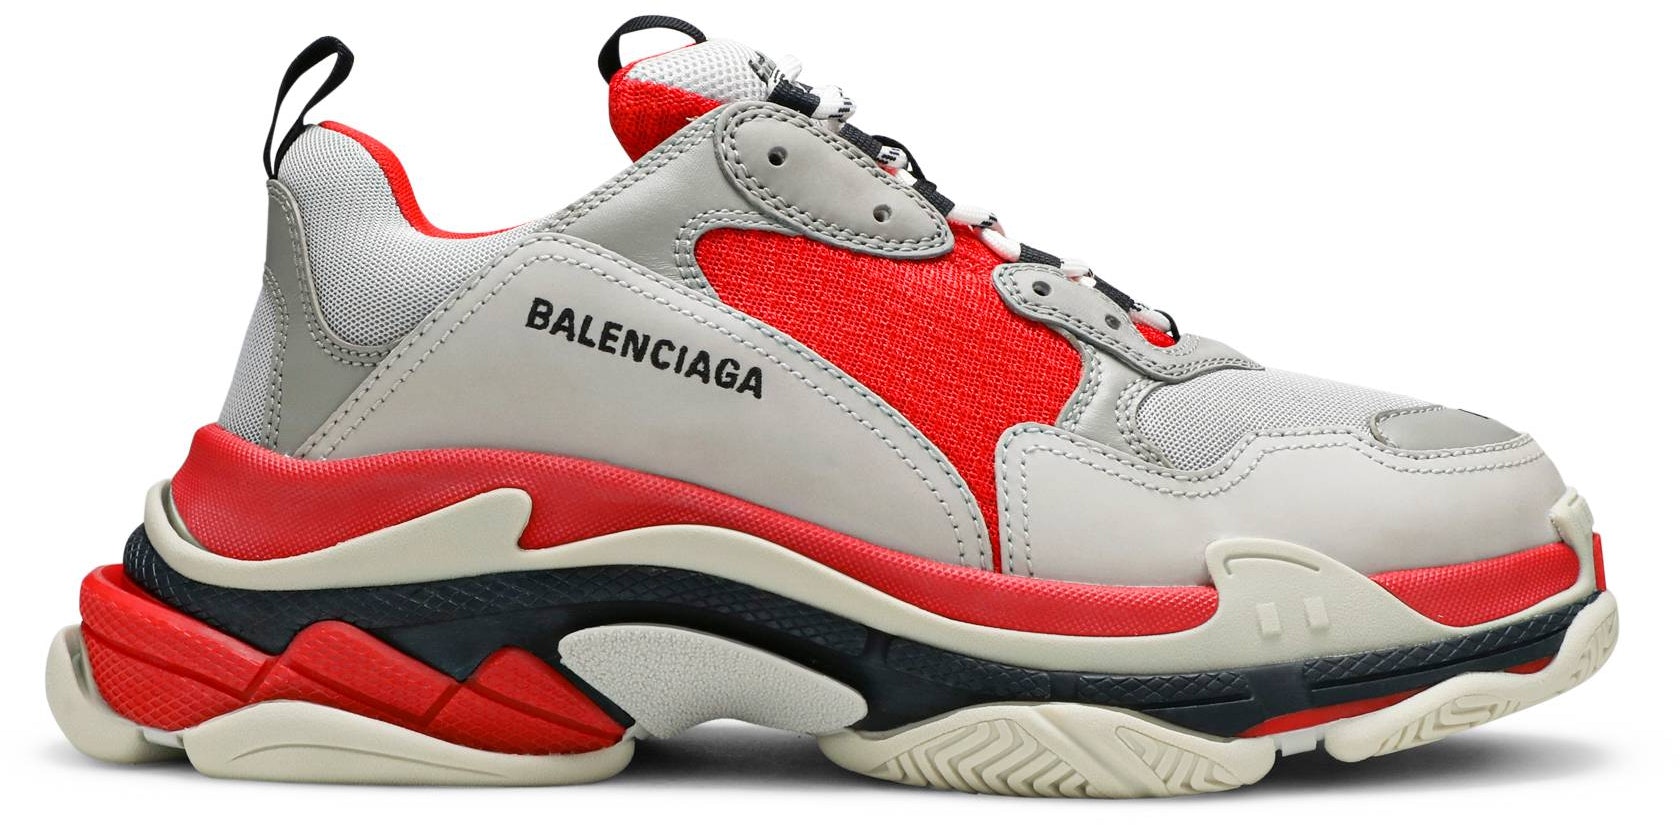 Balenciaga Triple S - Red  Red balenciaga sneakers, White